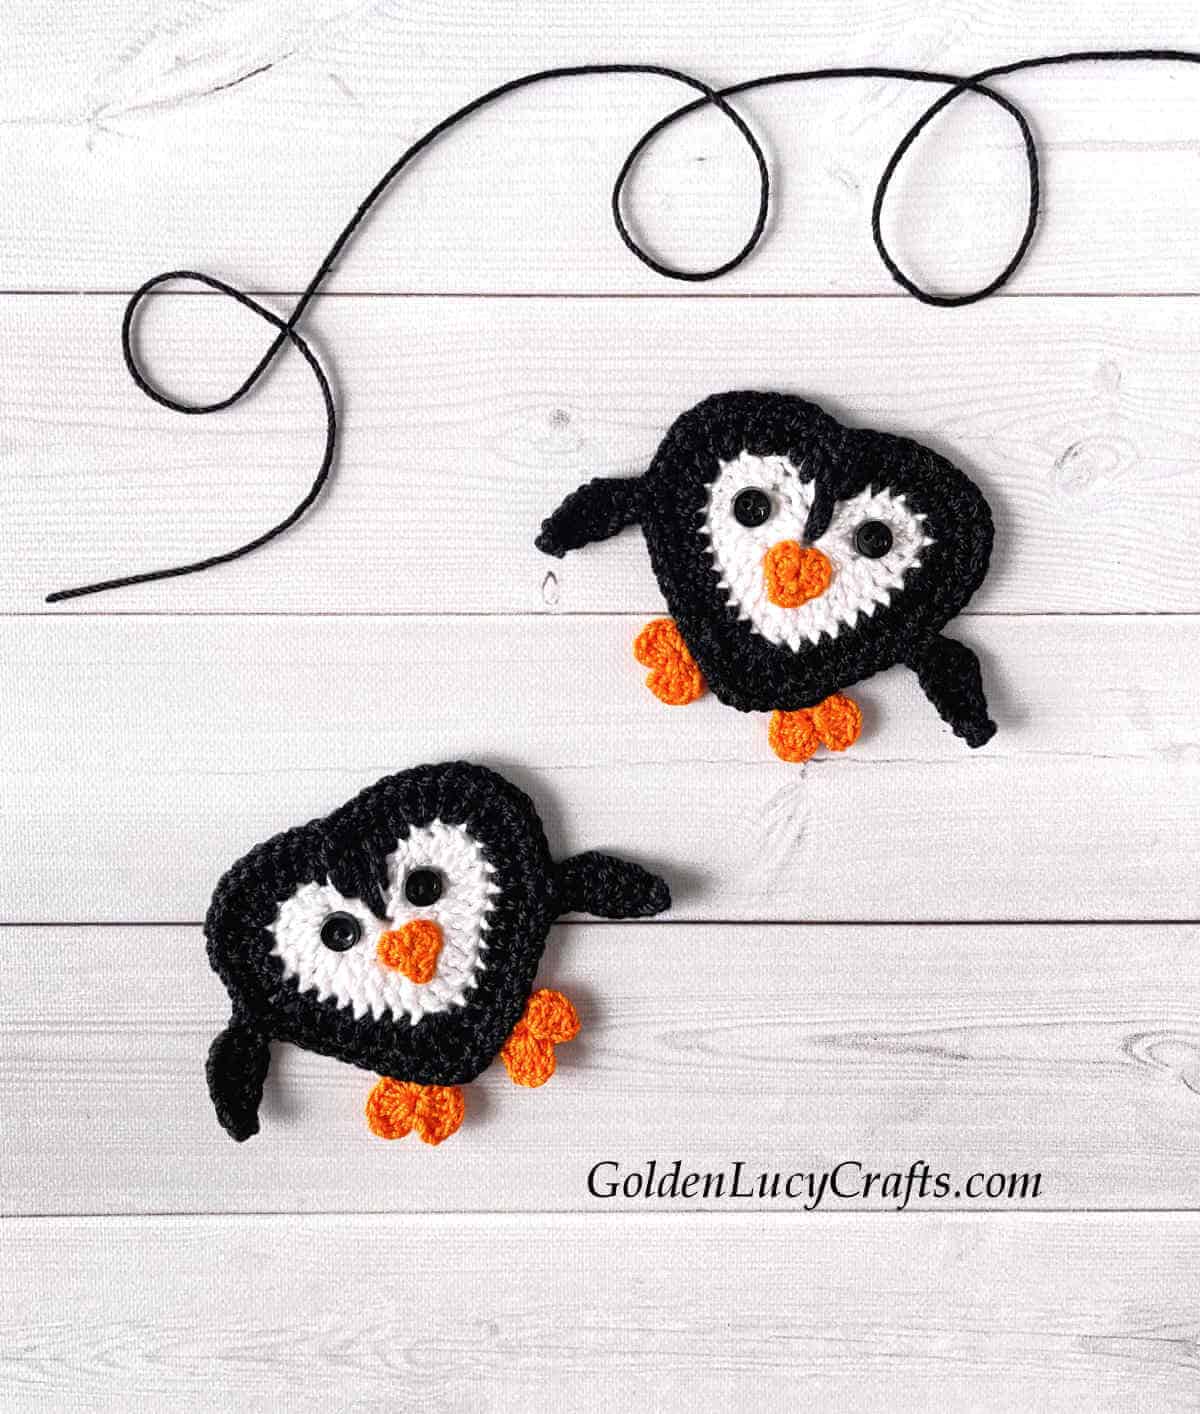 Two heart-shaped penguins crochet applique.